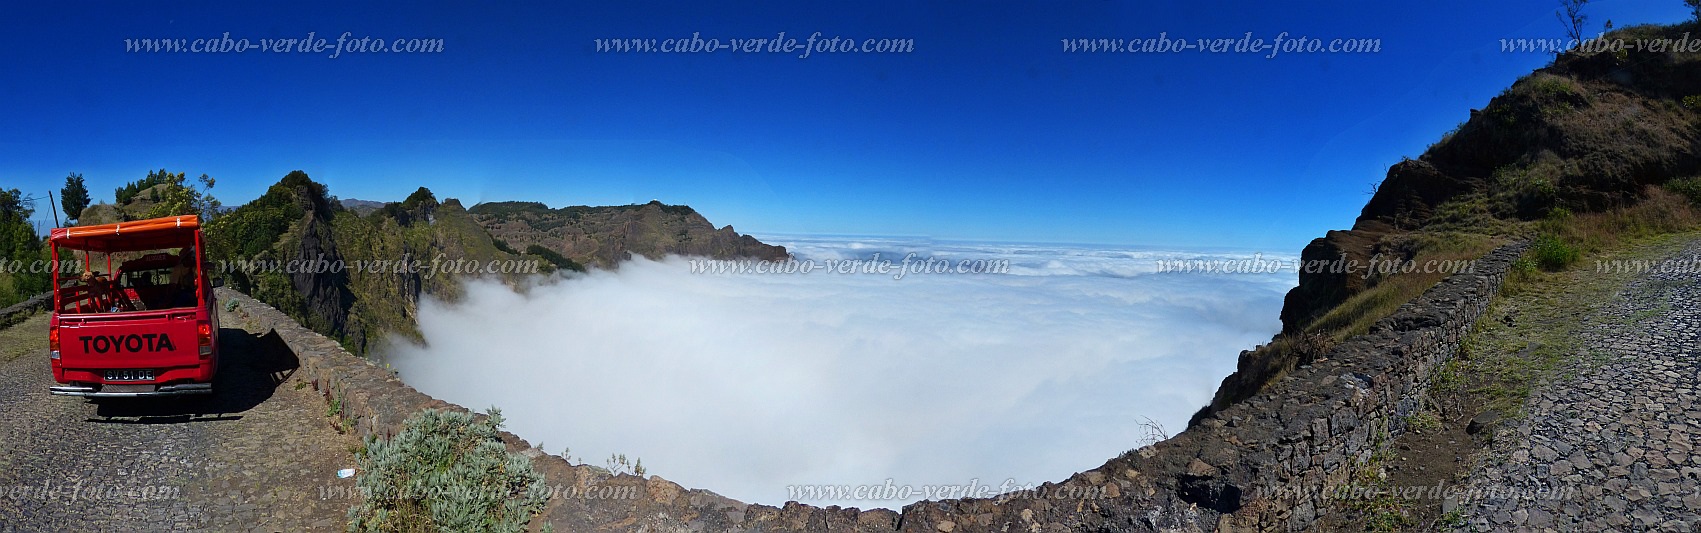 Santo Anto : Pico da Cruz : nuvens sobre o vale de Pal : Landscape MountainCabo Verde Foto Gallery